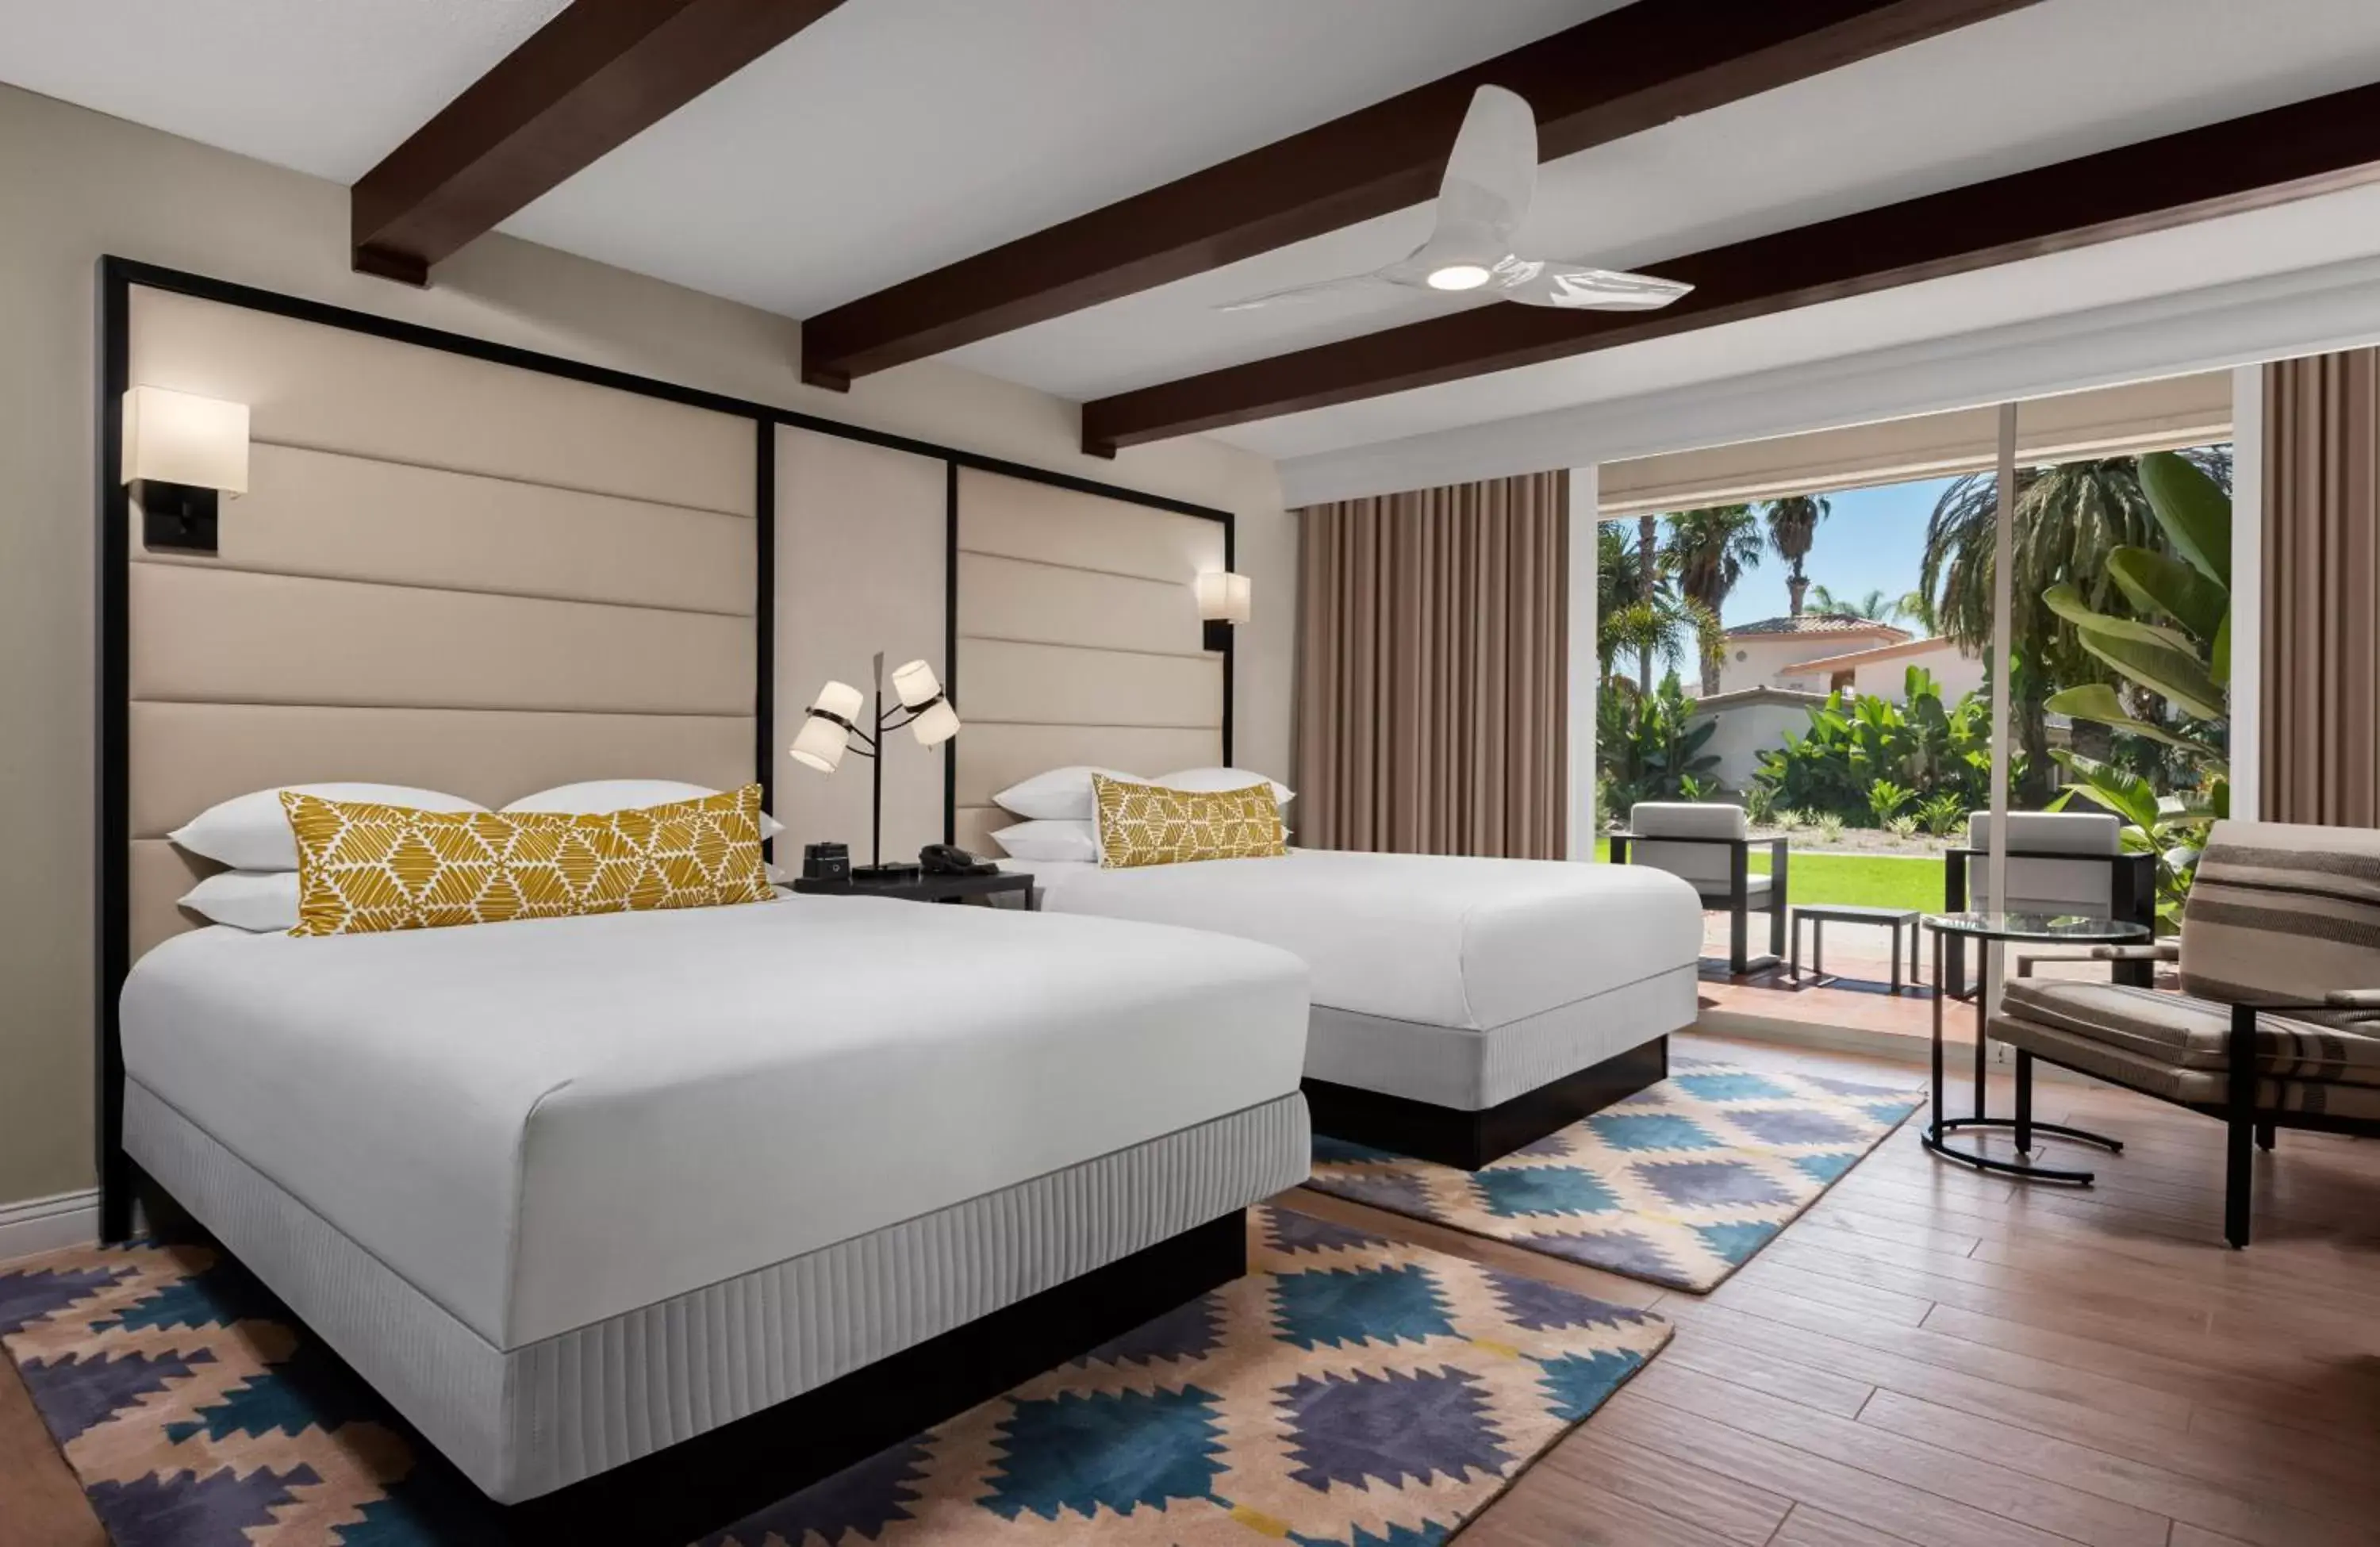 Bedroom in San Diego Mission Bay Resort